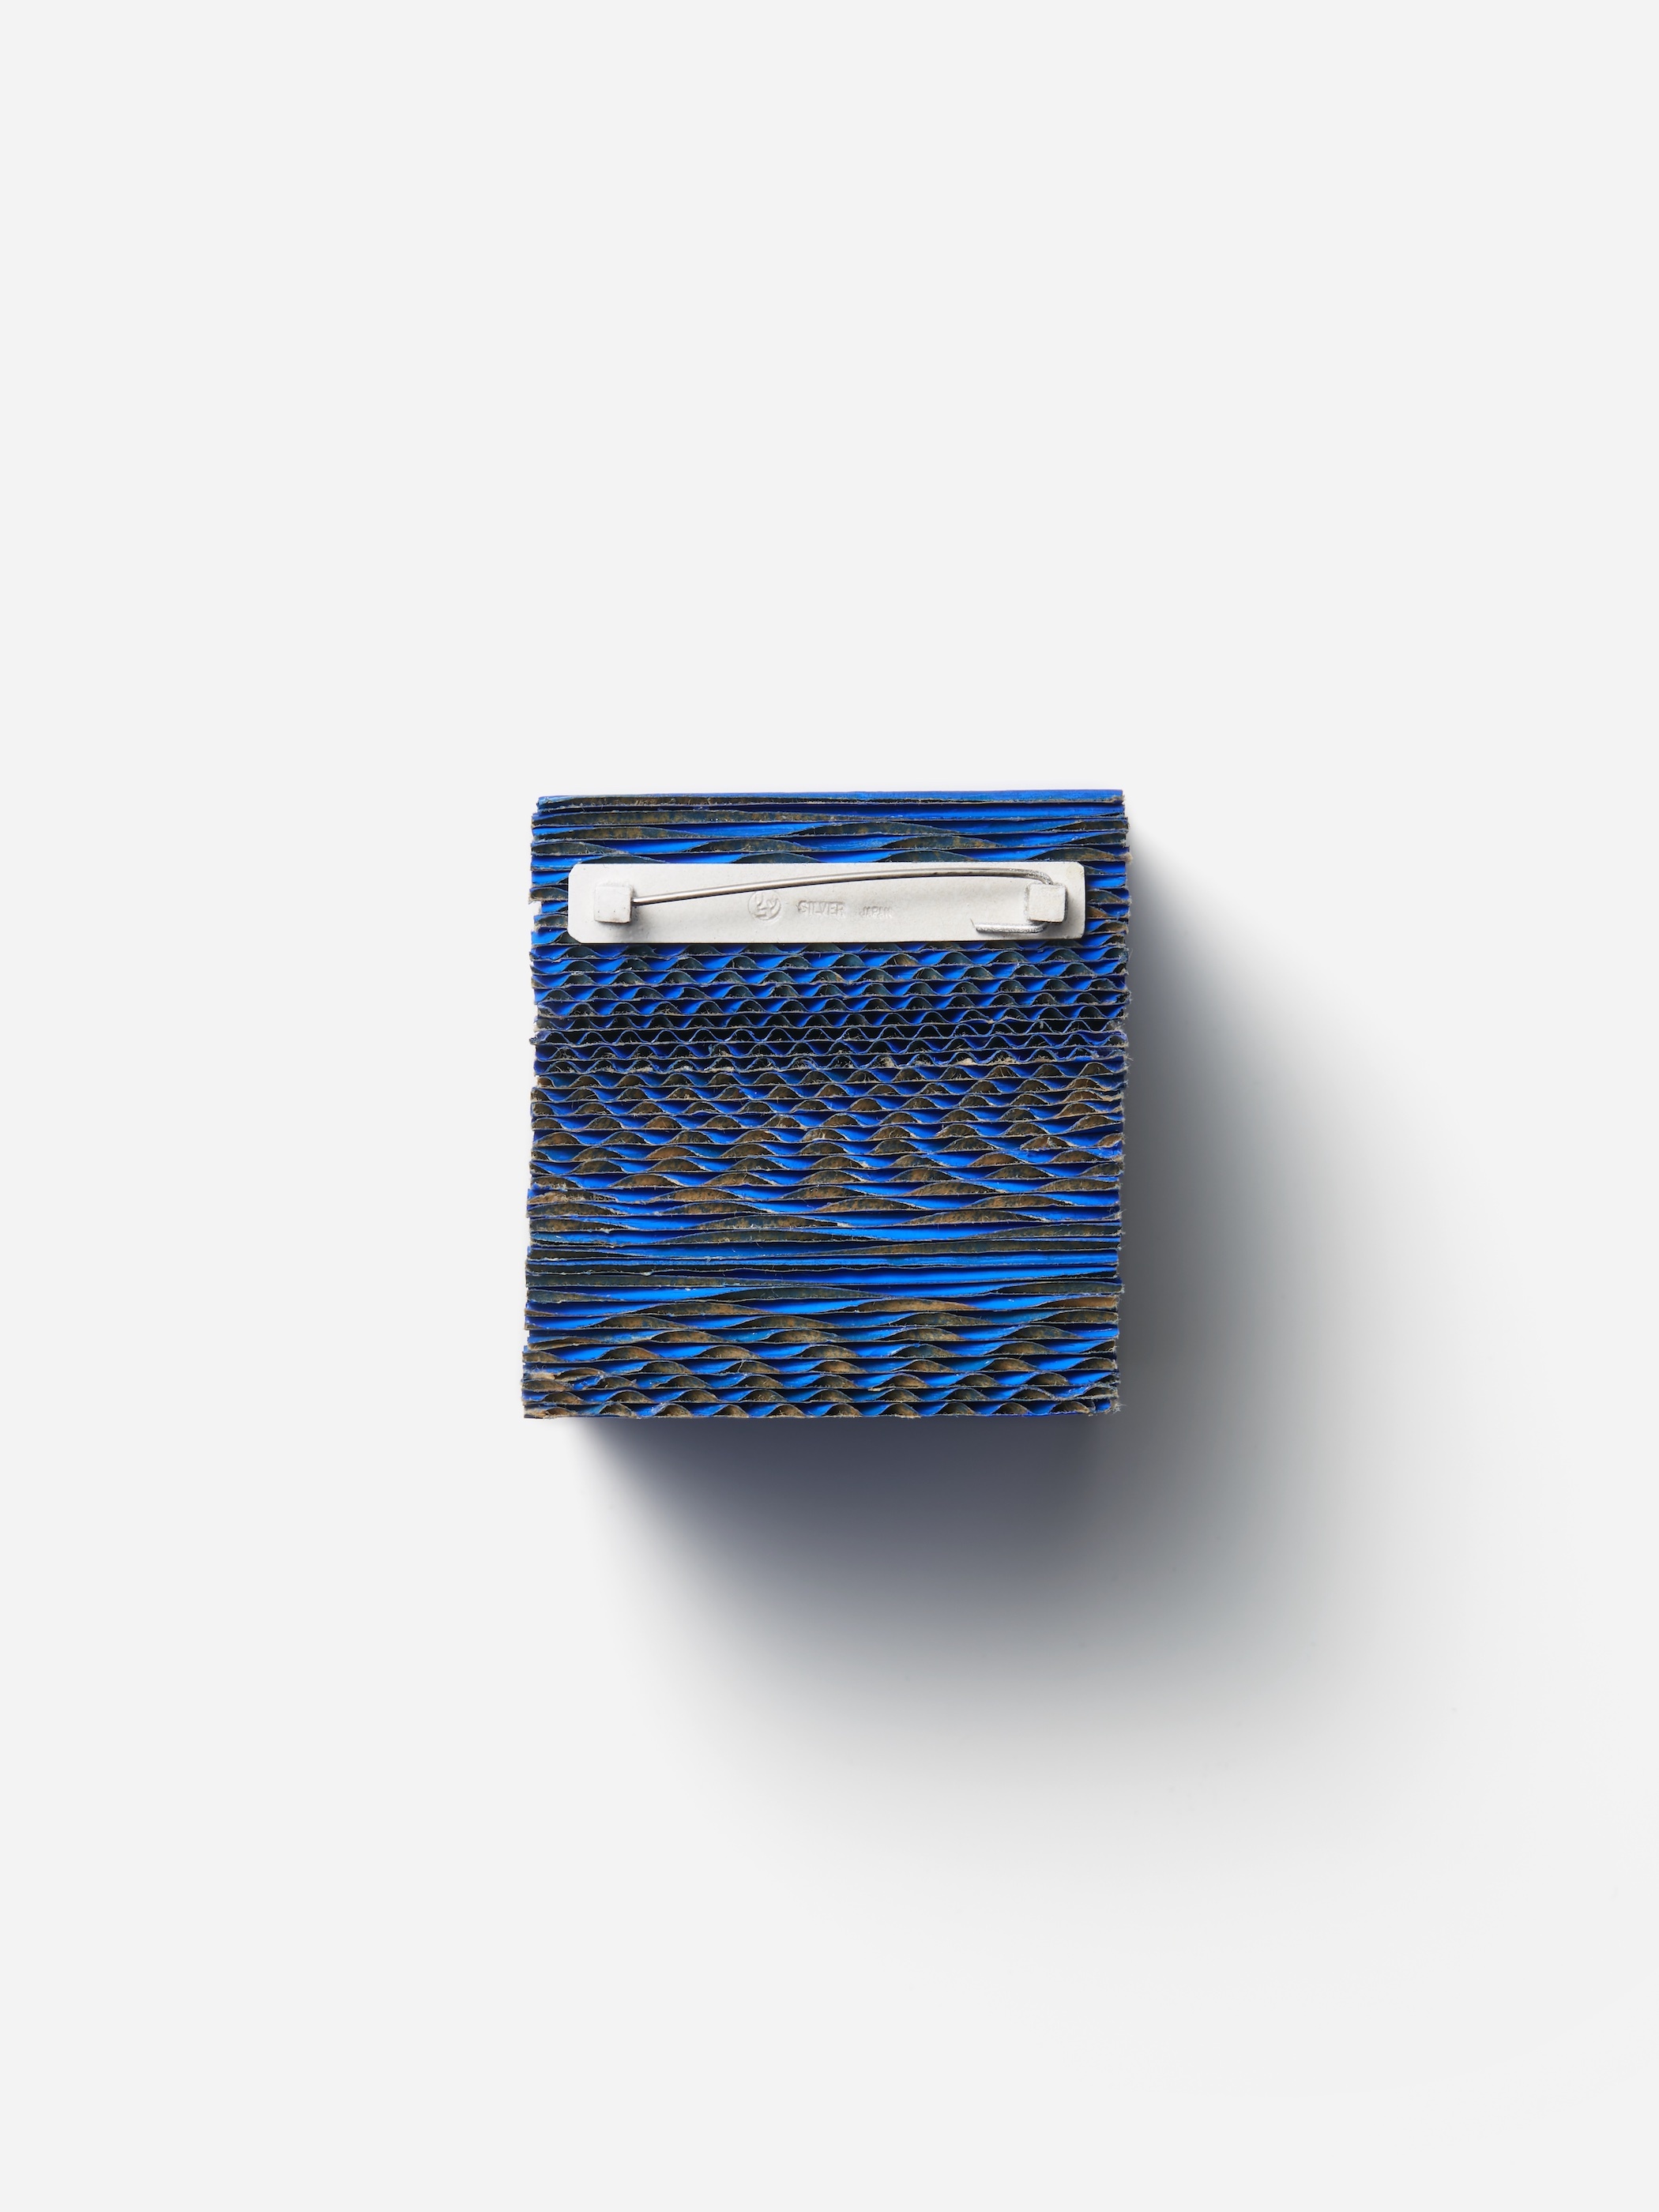 Ritsuko Ogura / Blue cube / Brooch